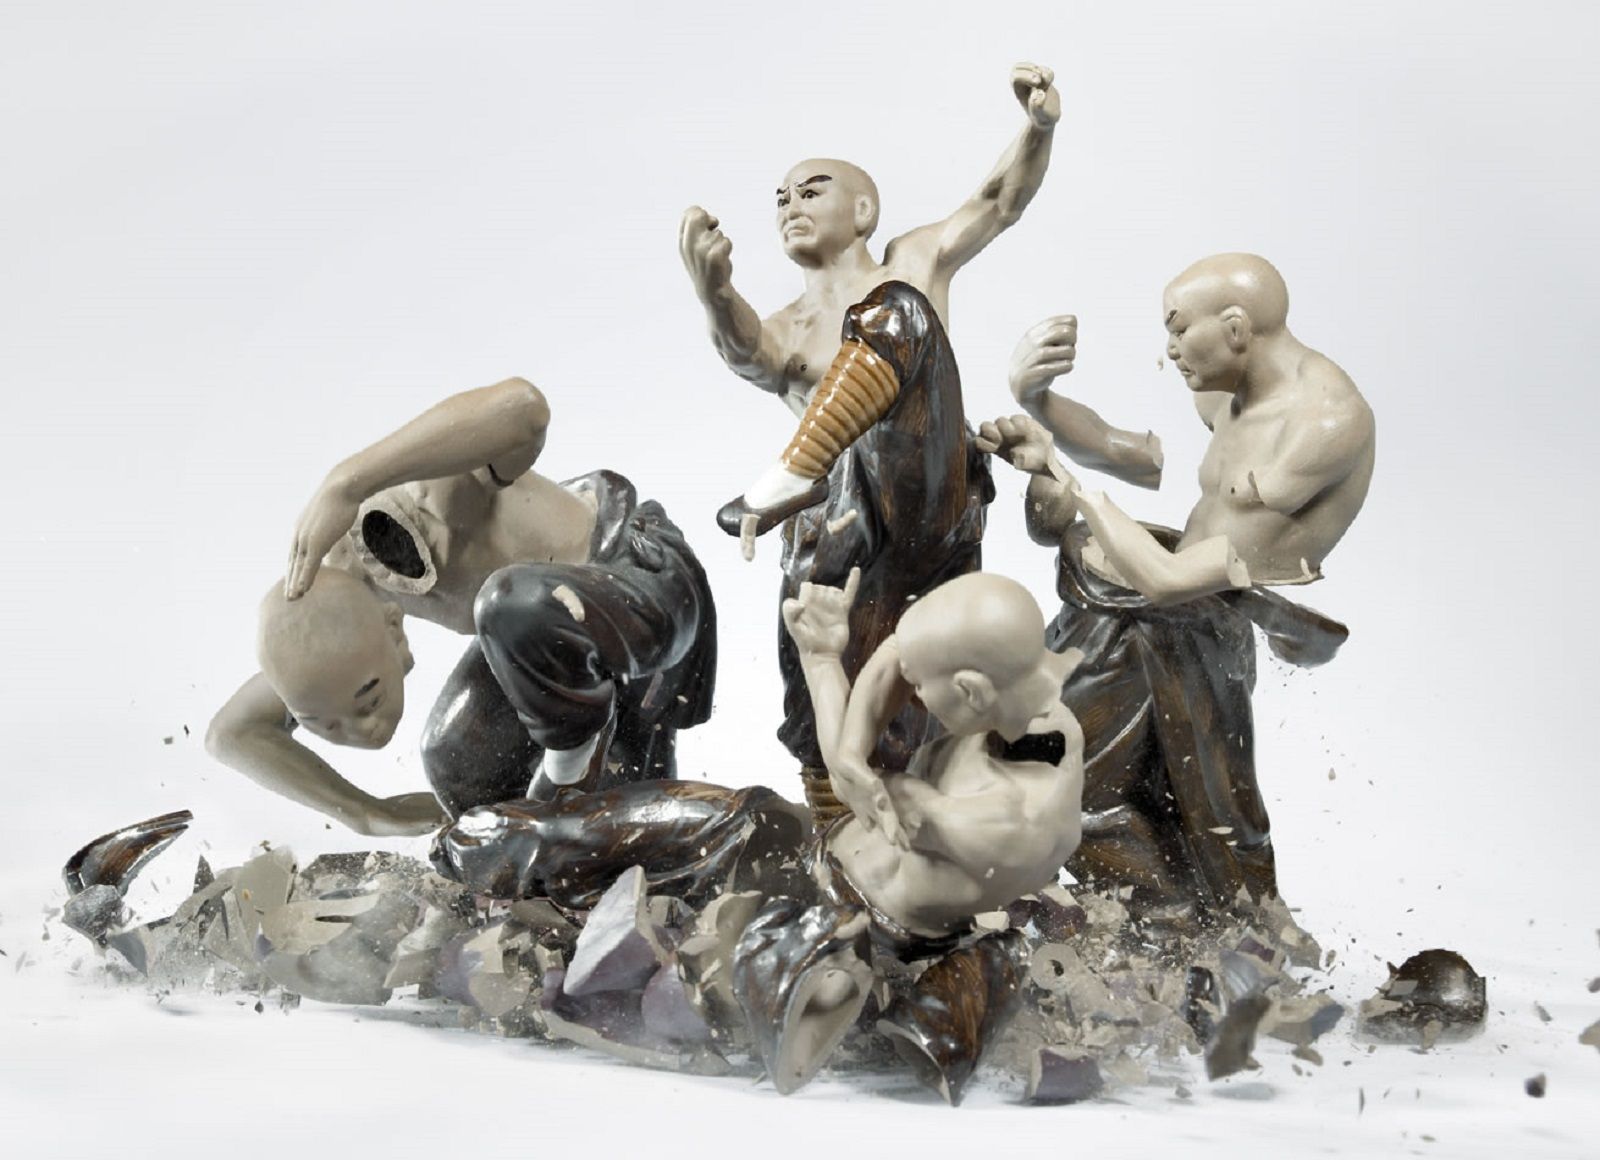 Martin Klimas - Exploding figurines high-speed photos image 7